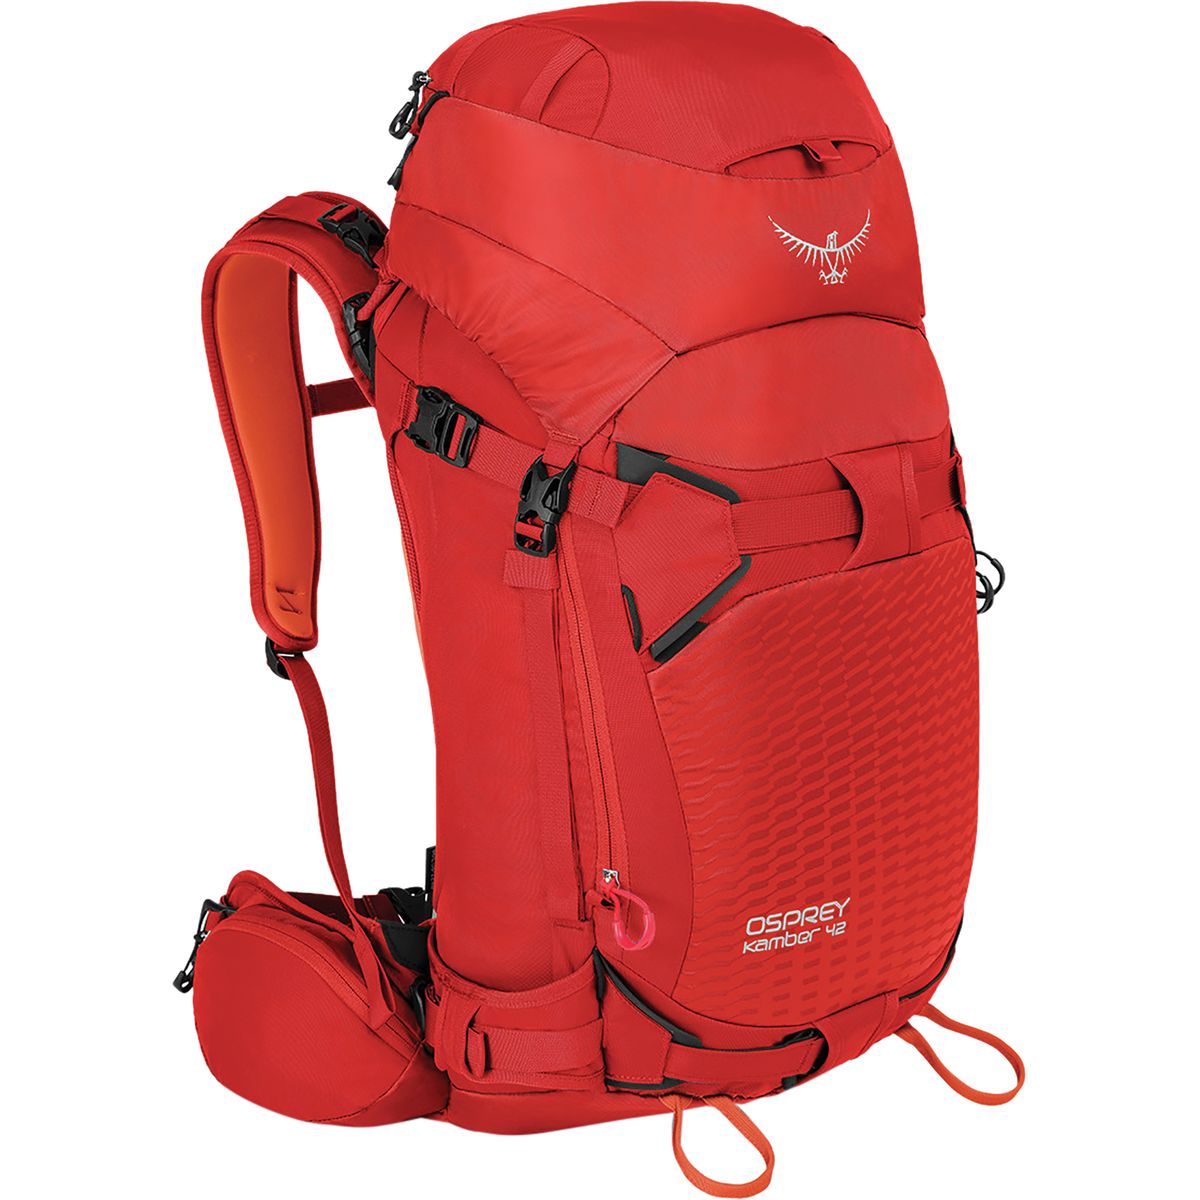 Osprey Packs Kamber 42 Backpack - 2441-2563cu in Ripcord Red